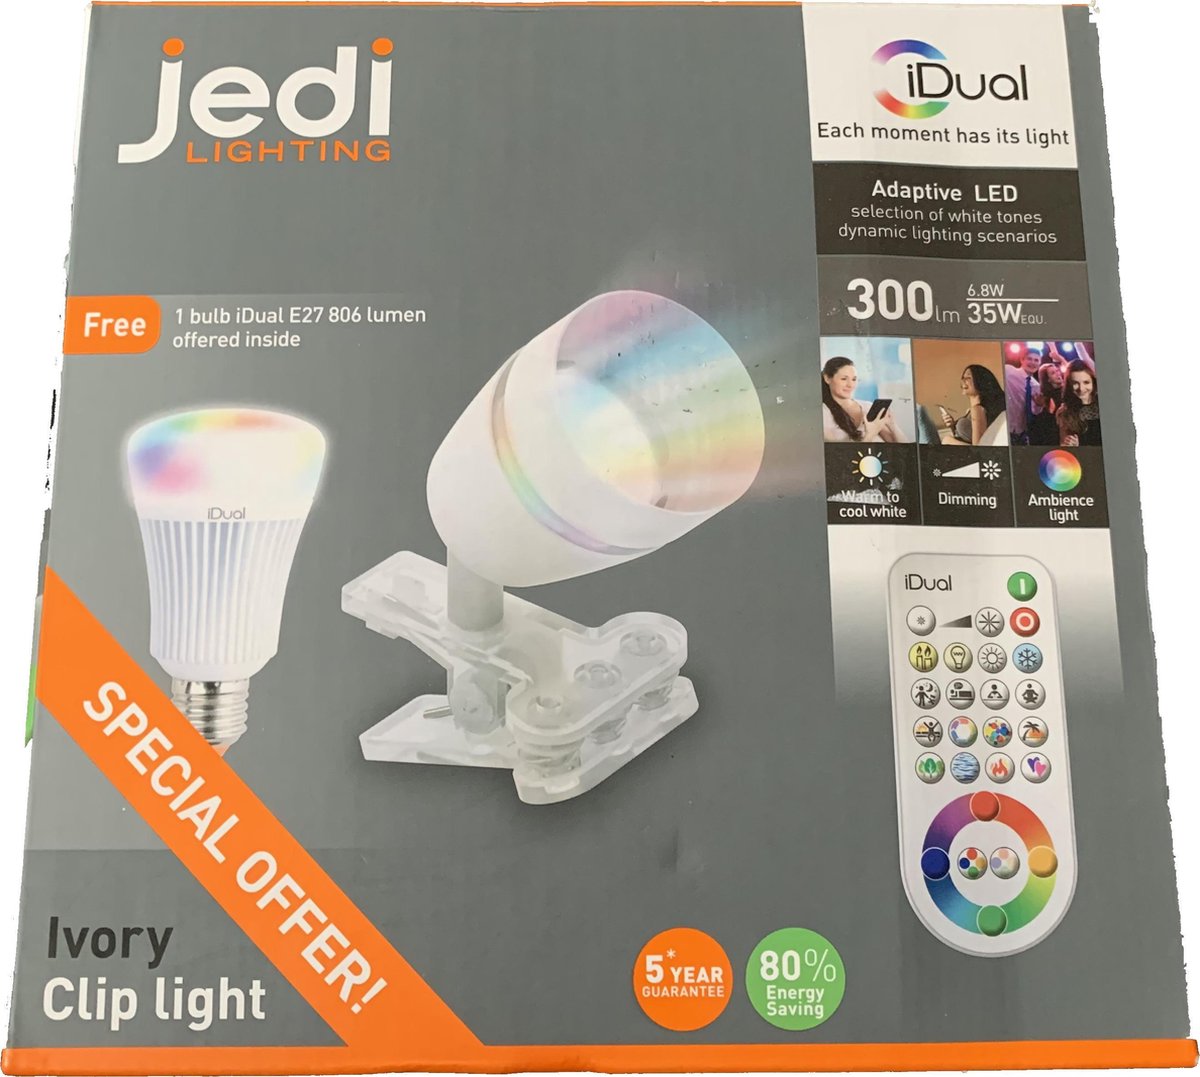 pauze Weekendtas Verpersoonlijking Jedi Ivory Clip Light iDual LED lamp met afstandsbediening en extra lamp |  bol.com